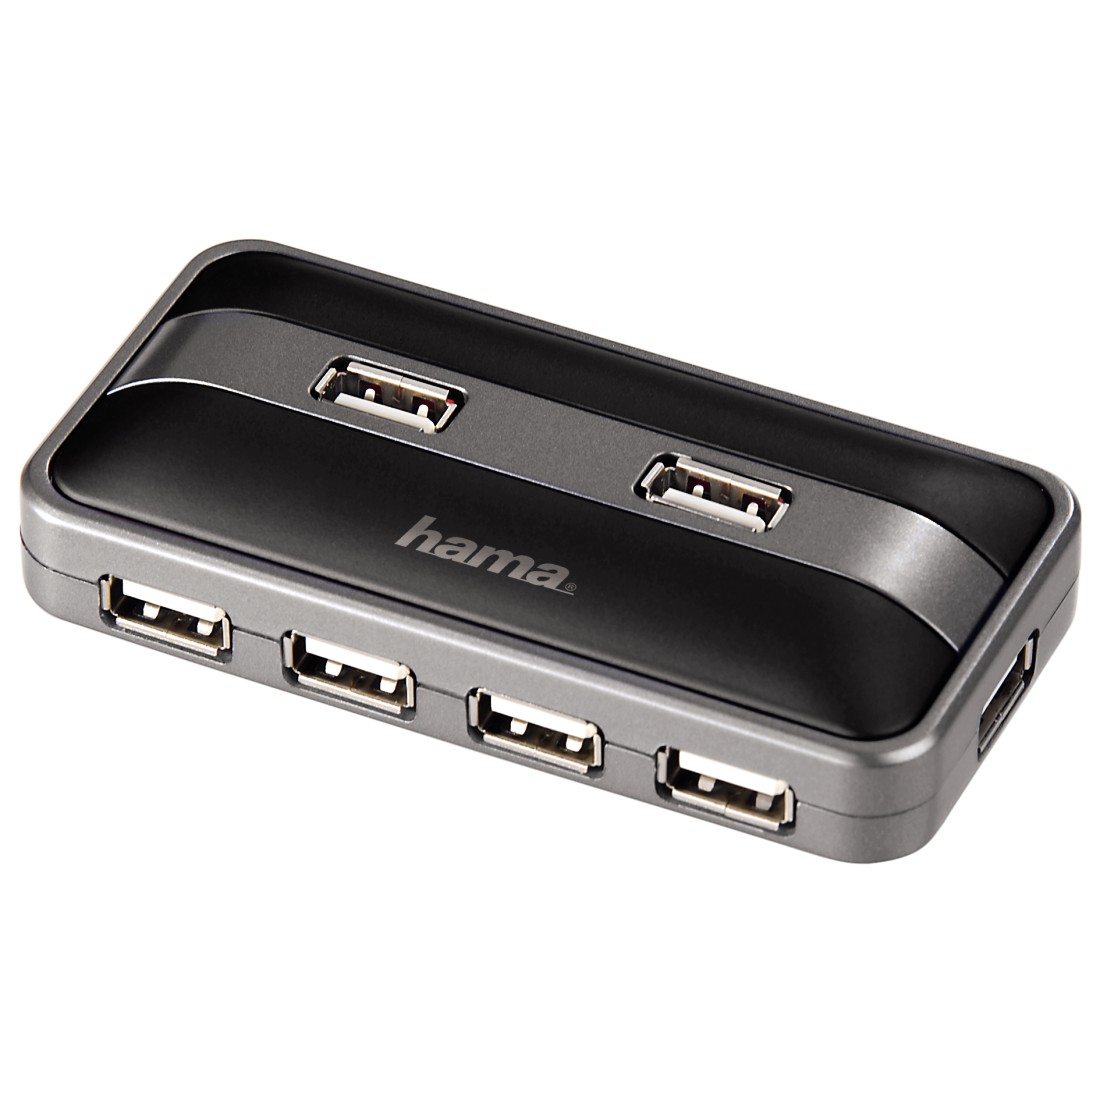 00078483 Hama USB 2.0 Hub 1:7, with power supply, black/anthracite